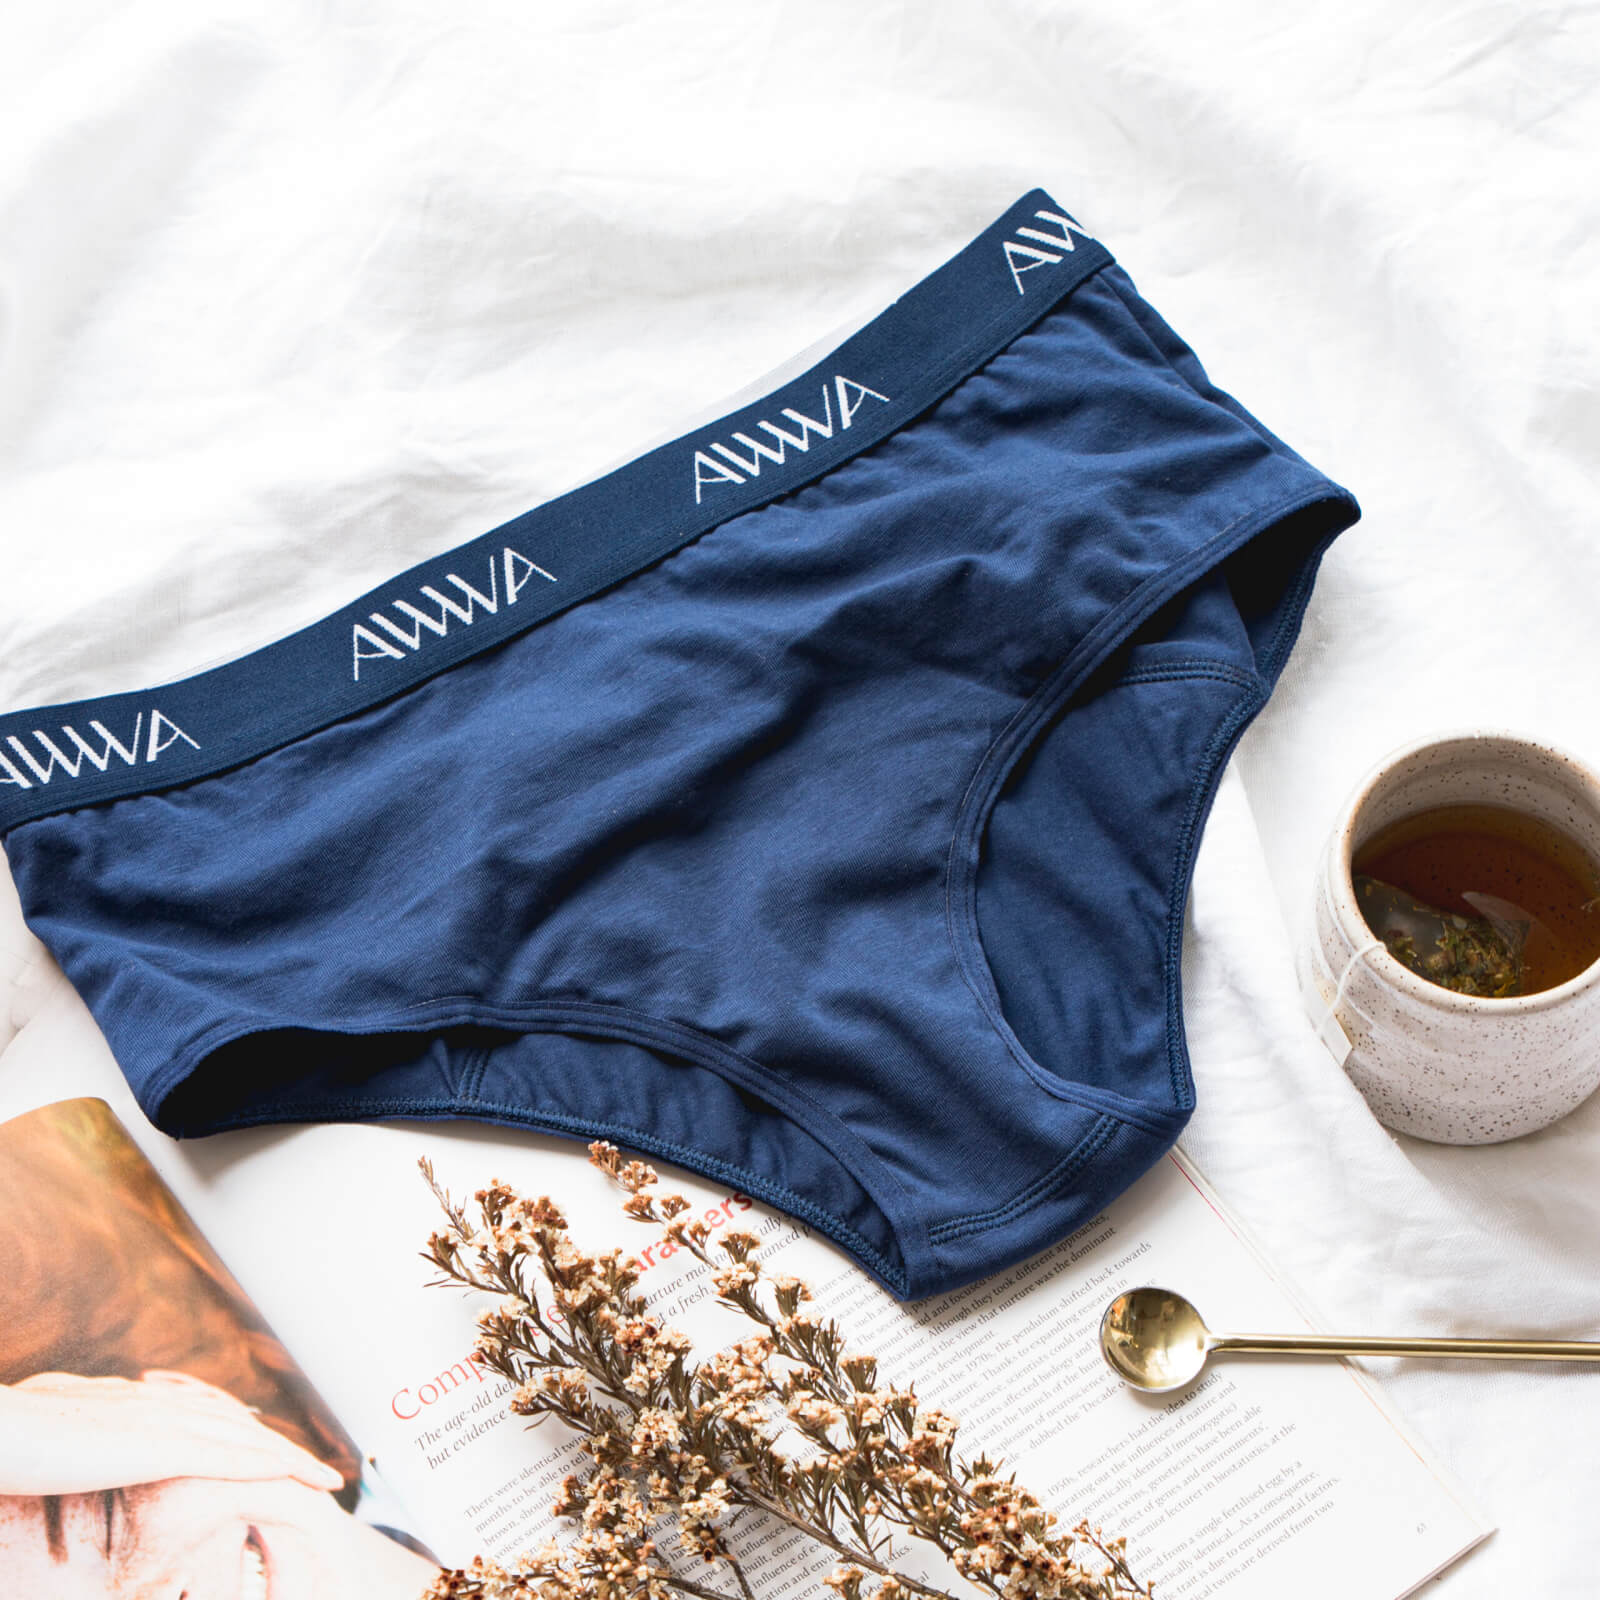 Awwa Period Proof Underwear - Organic Cotton Brief